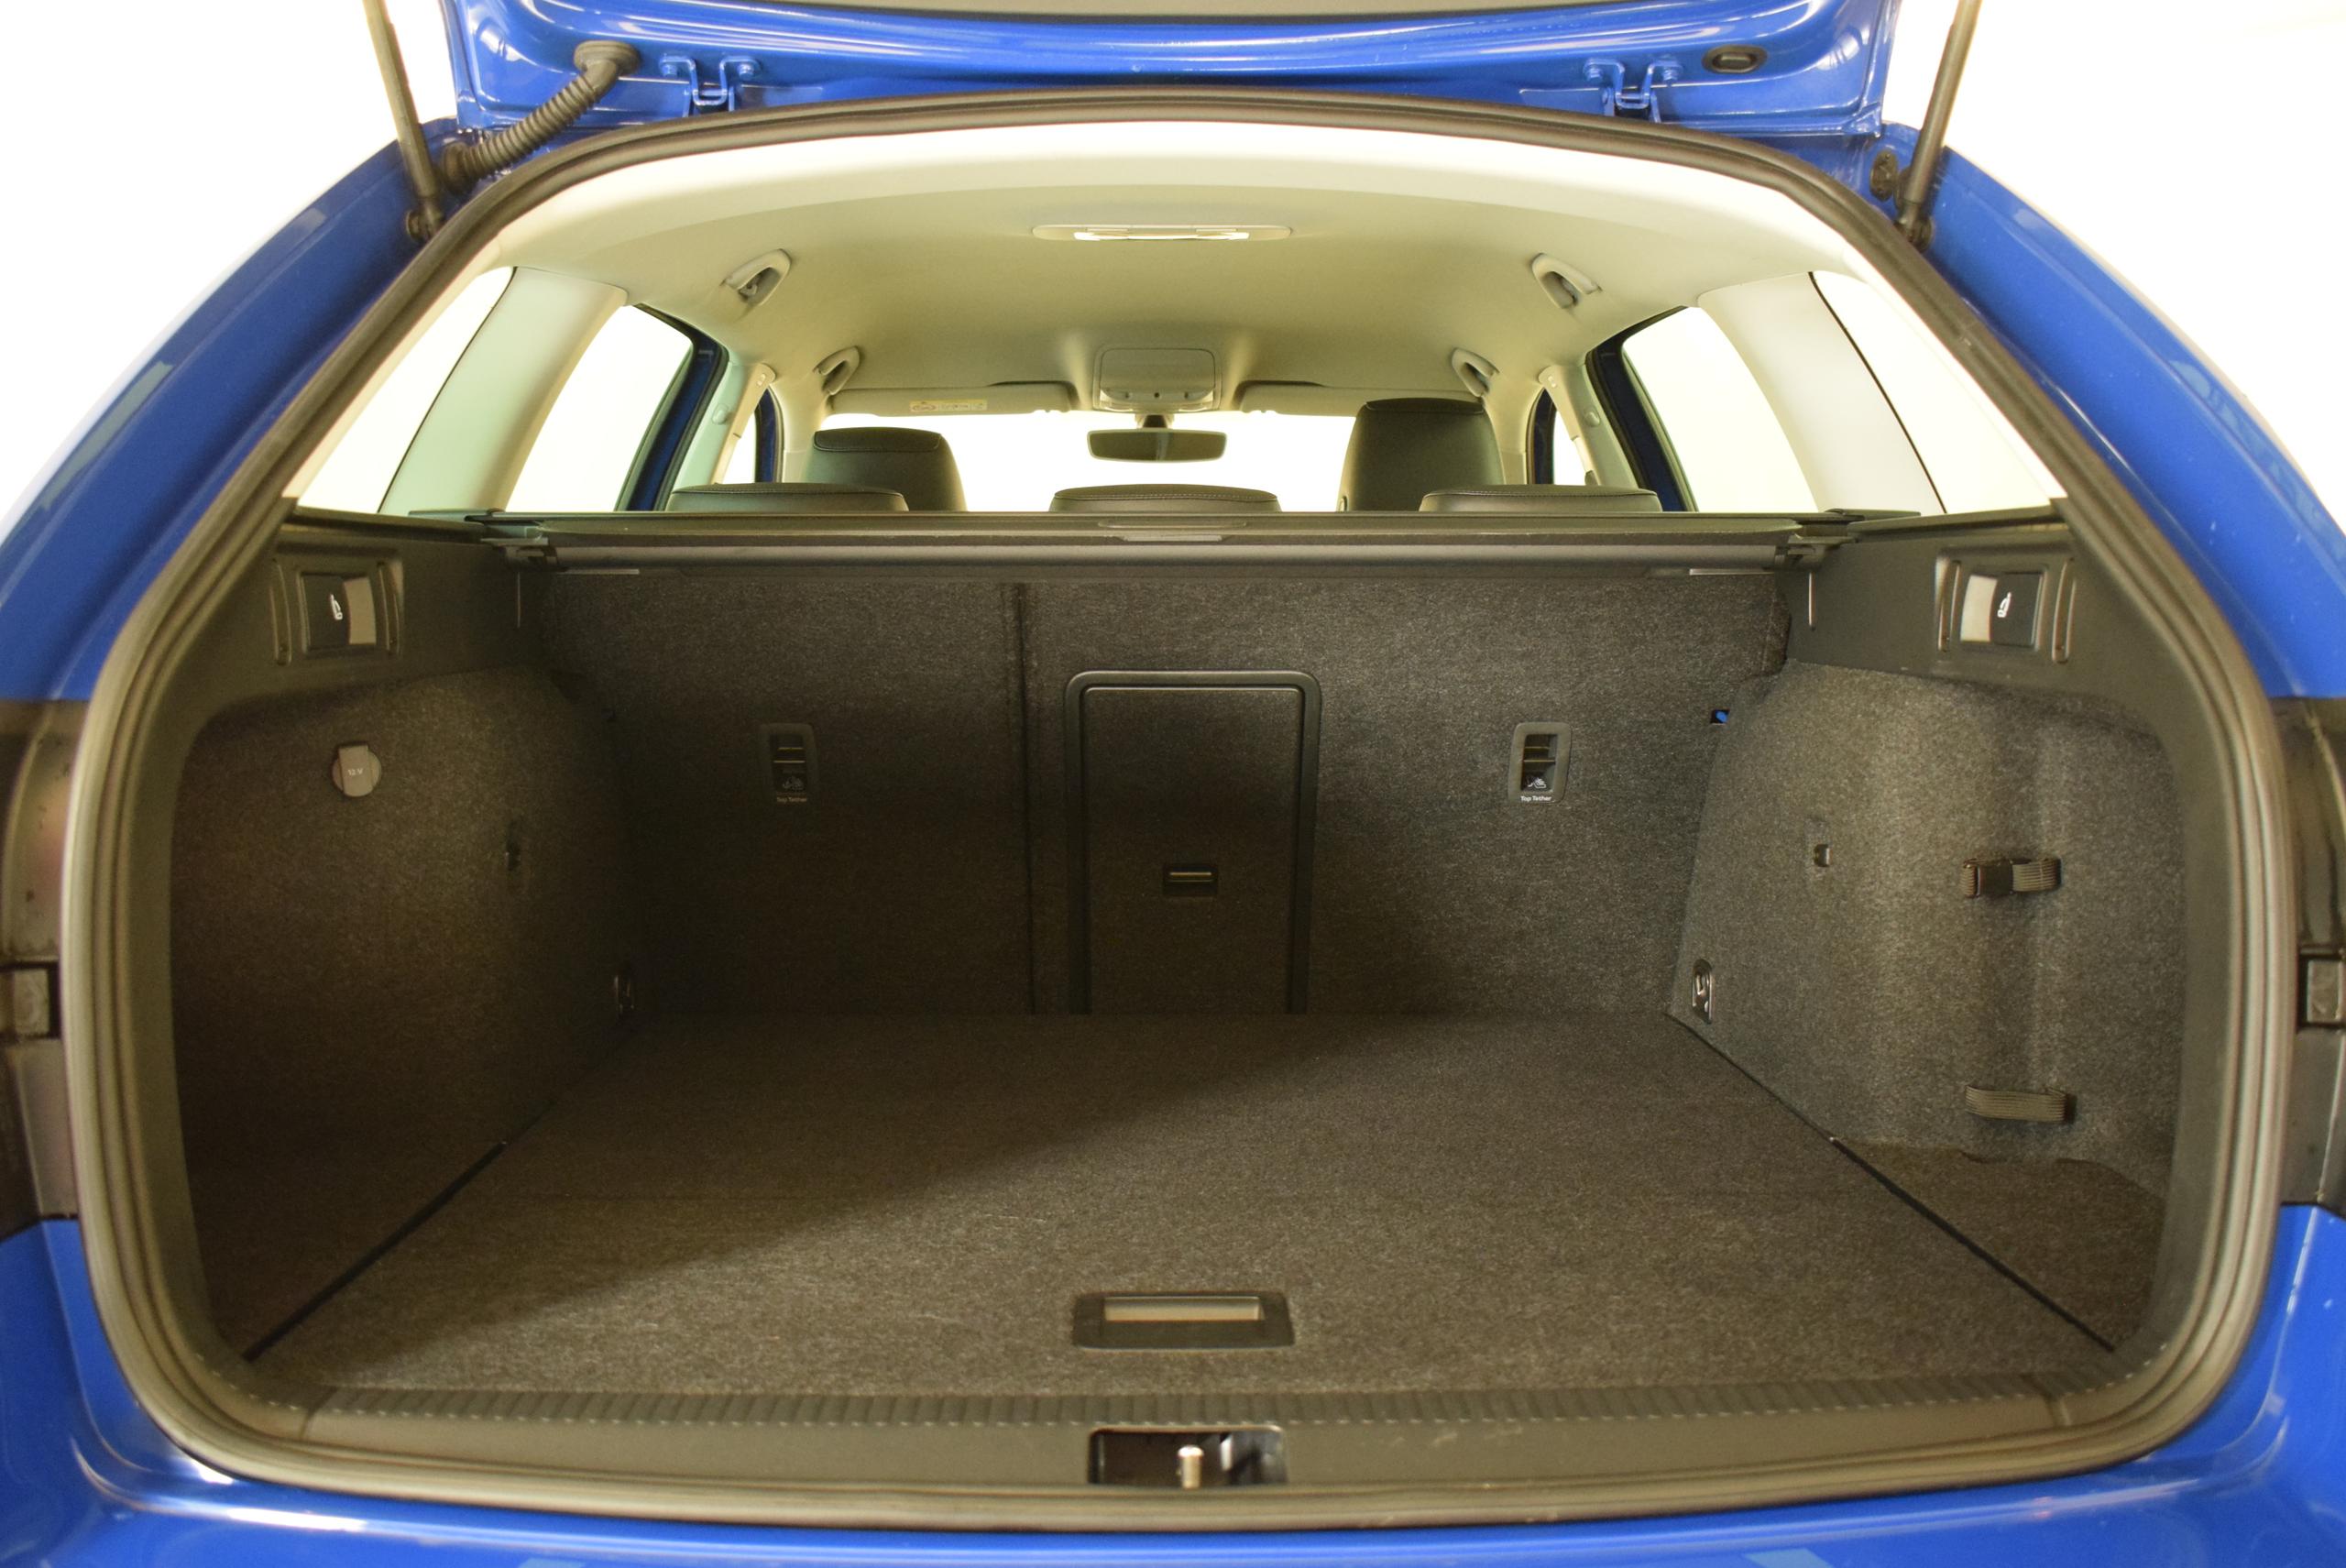 Skoda Octavia 4 Combi (2020) Style - FULL in-depth REVIEW exterior,  interior, trunk space (1.5 TSI) 